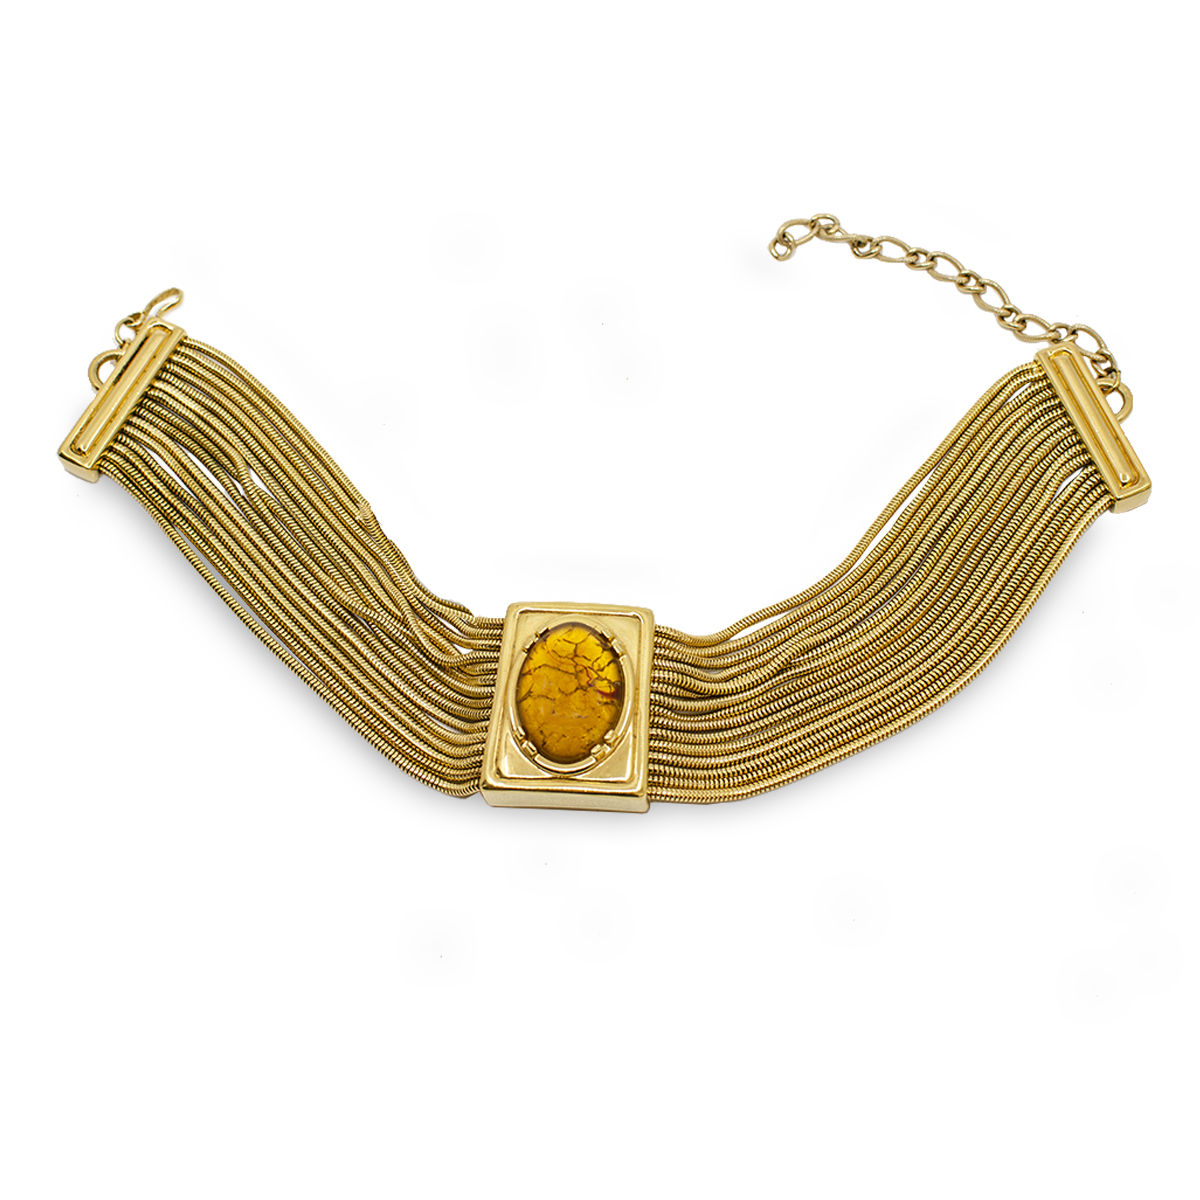 vintage monet necklace gold snake chains